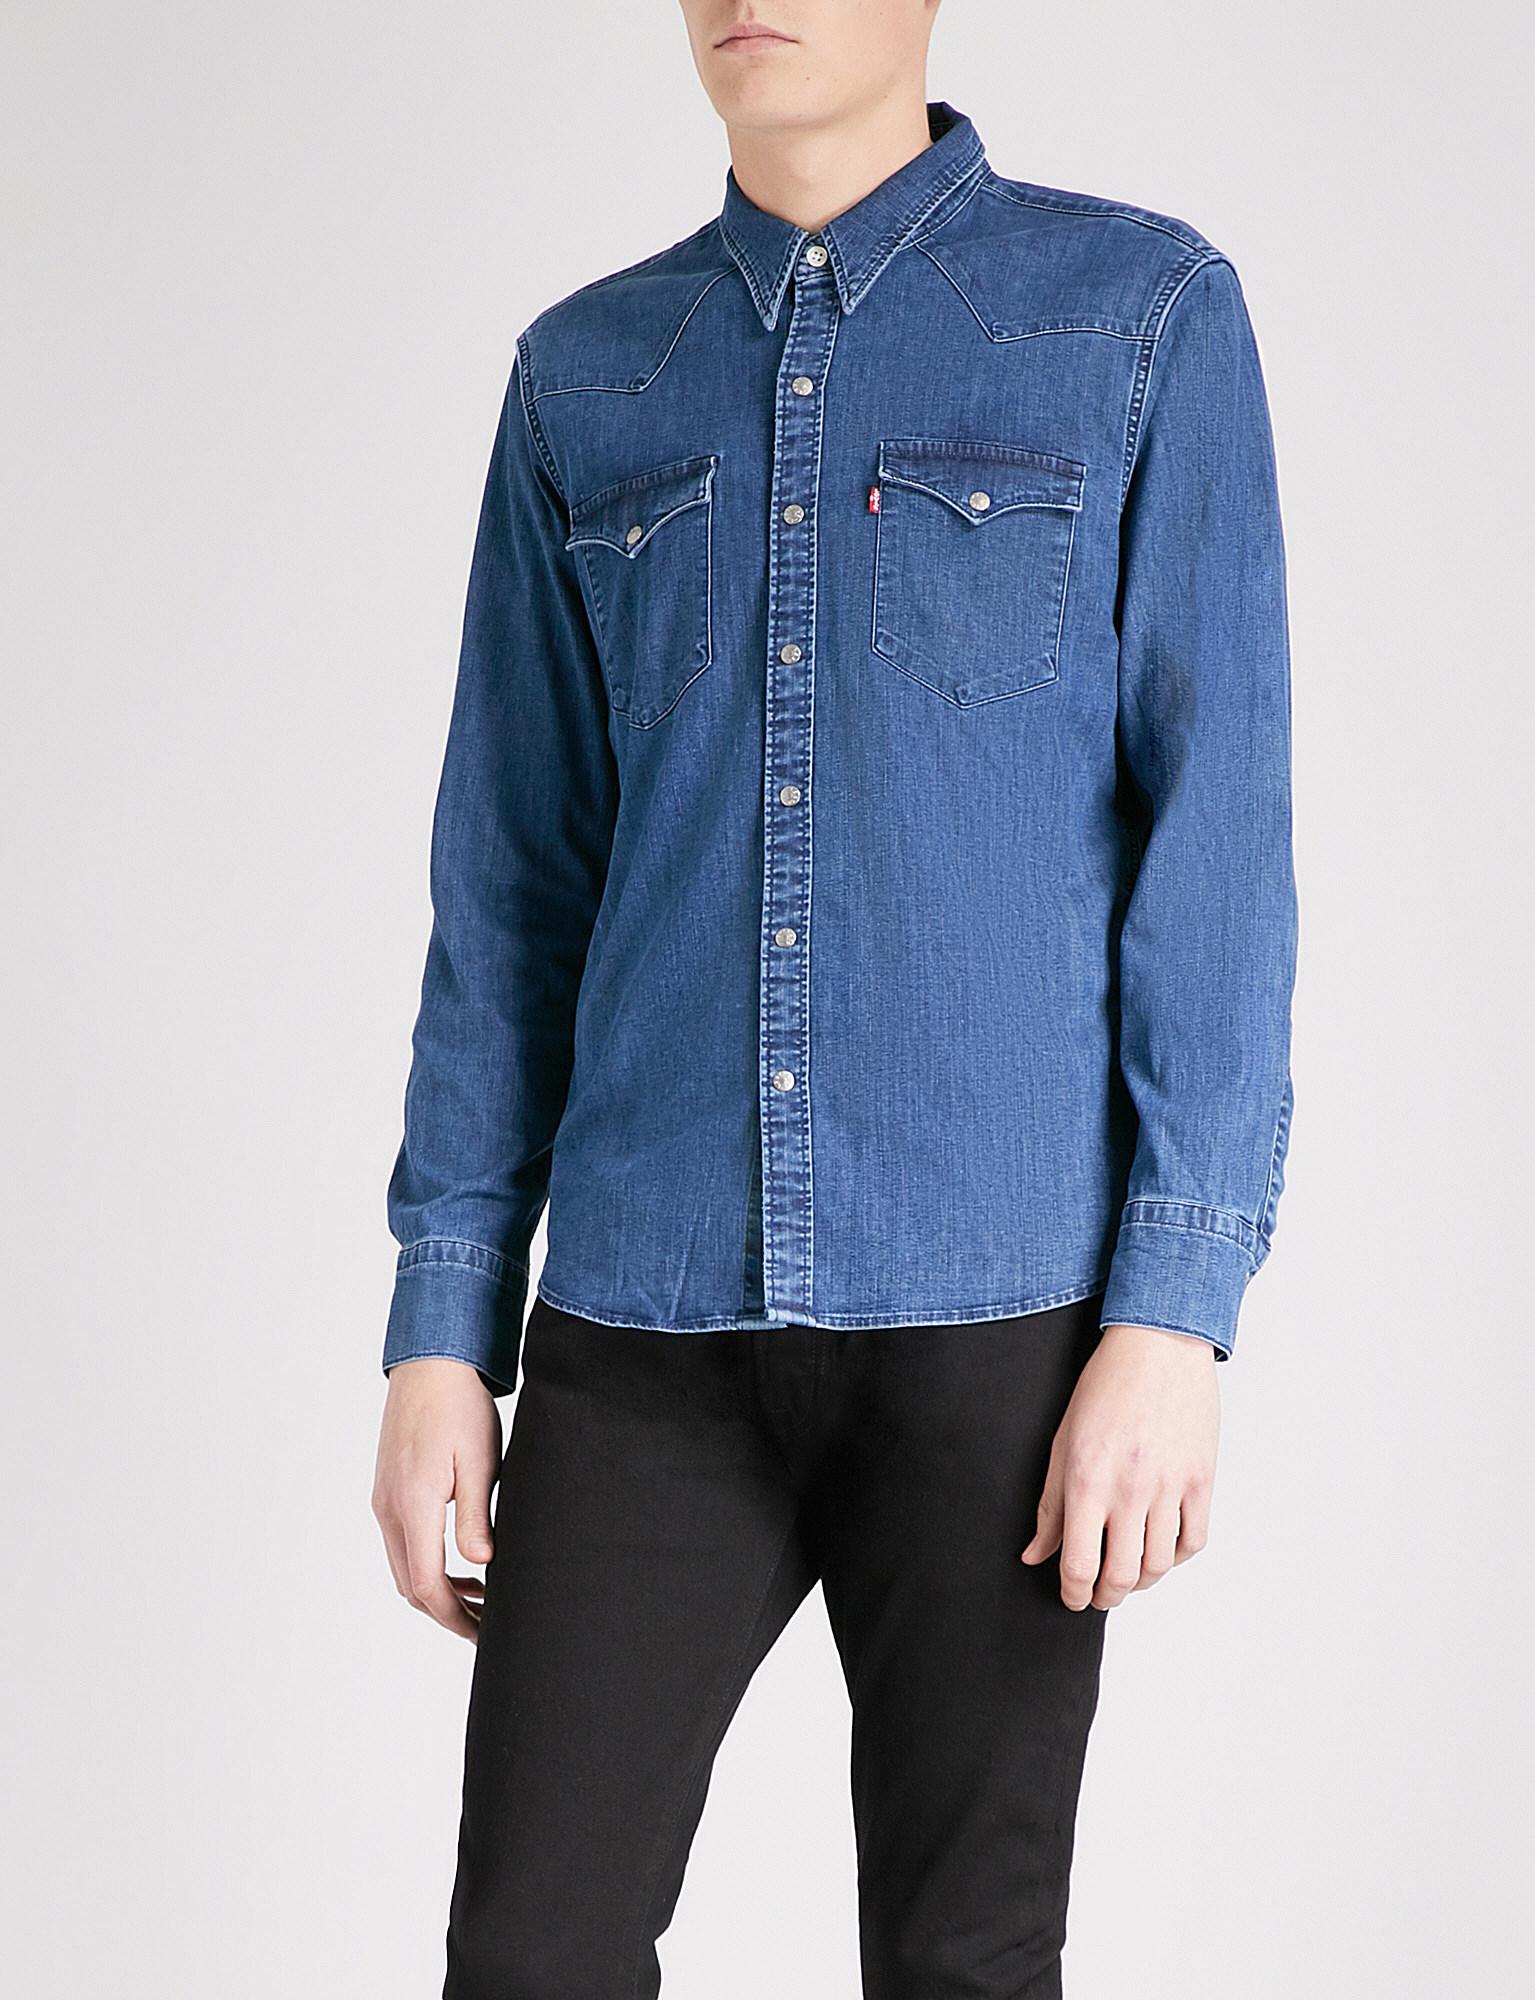 Lyst - Levi'S Barstow Western Regular-fit Denim Shirt in Blue for Men